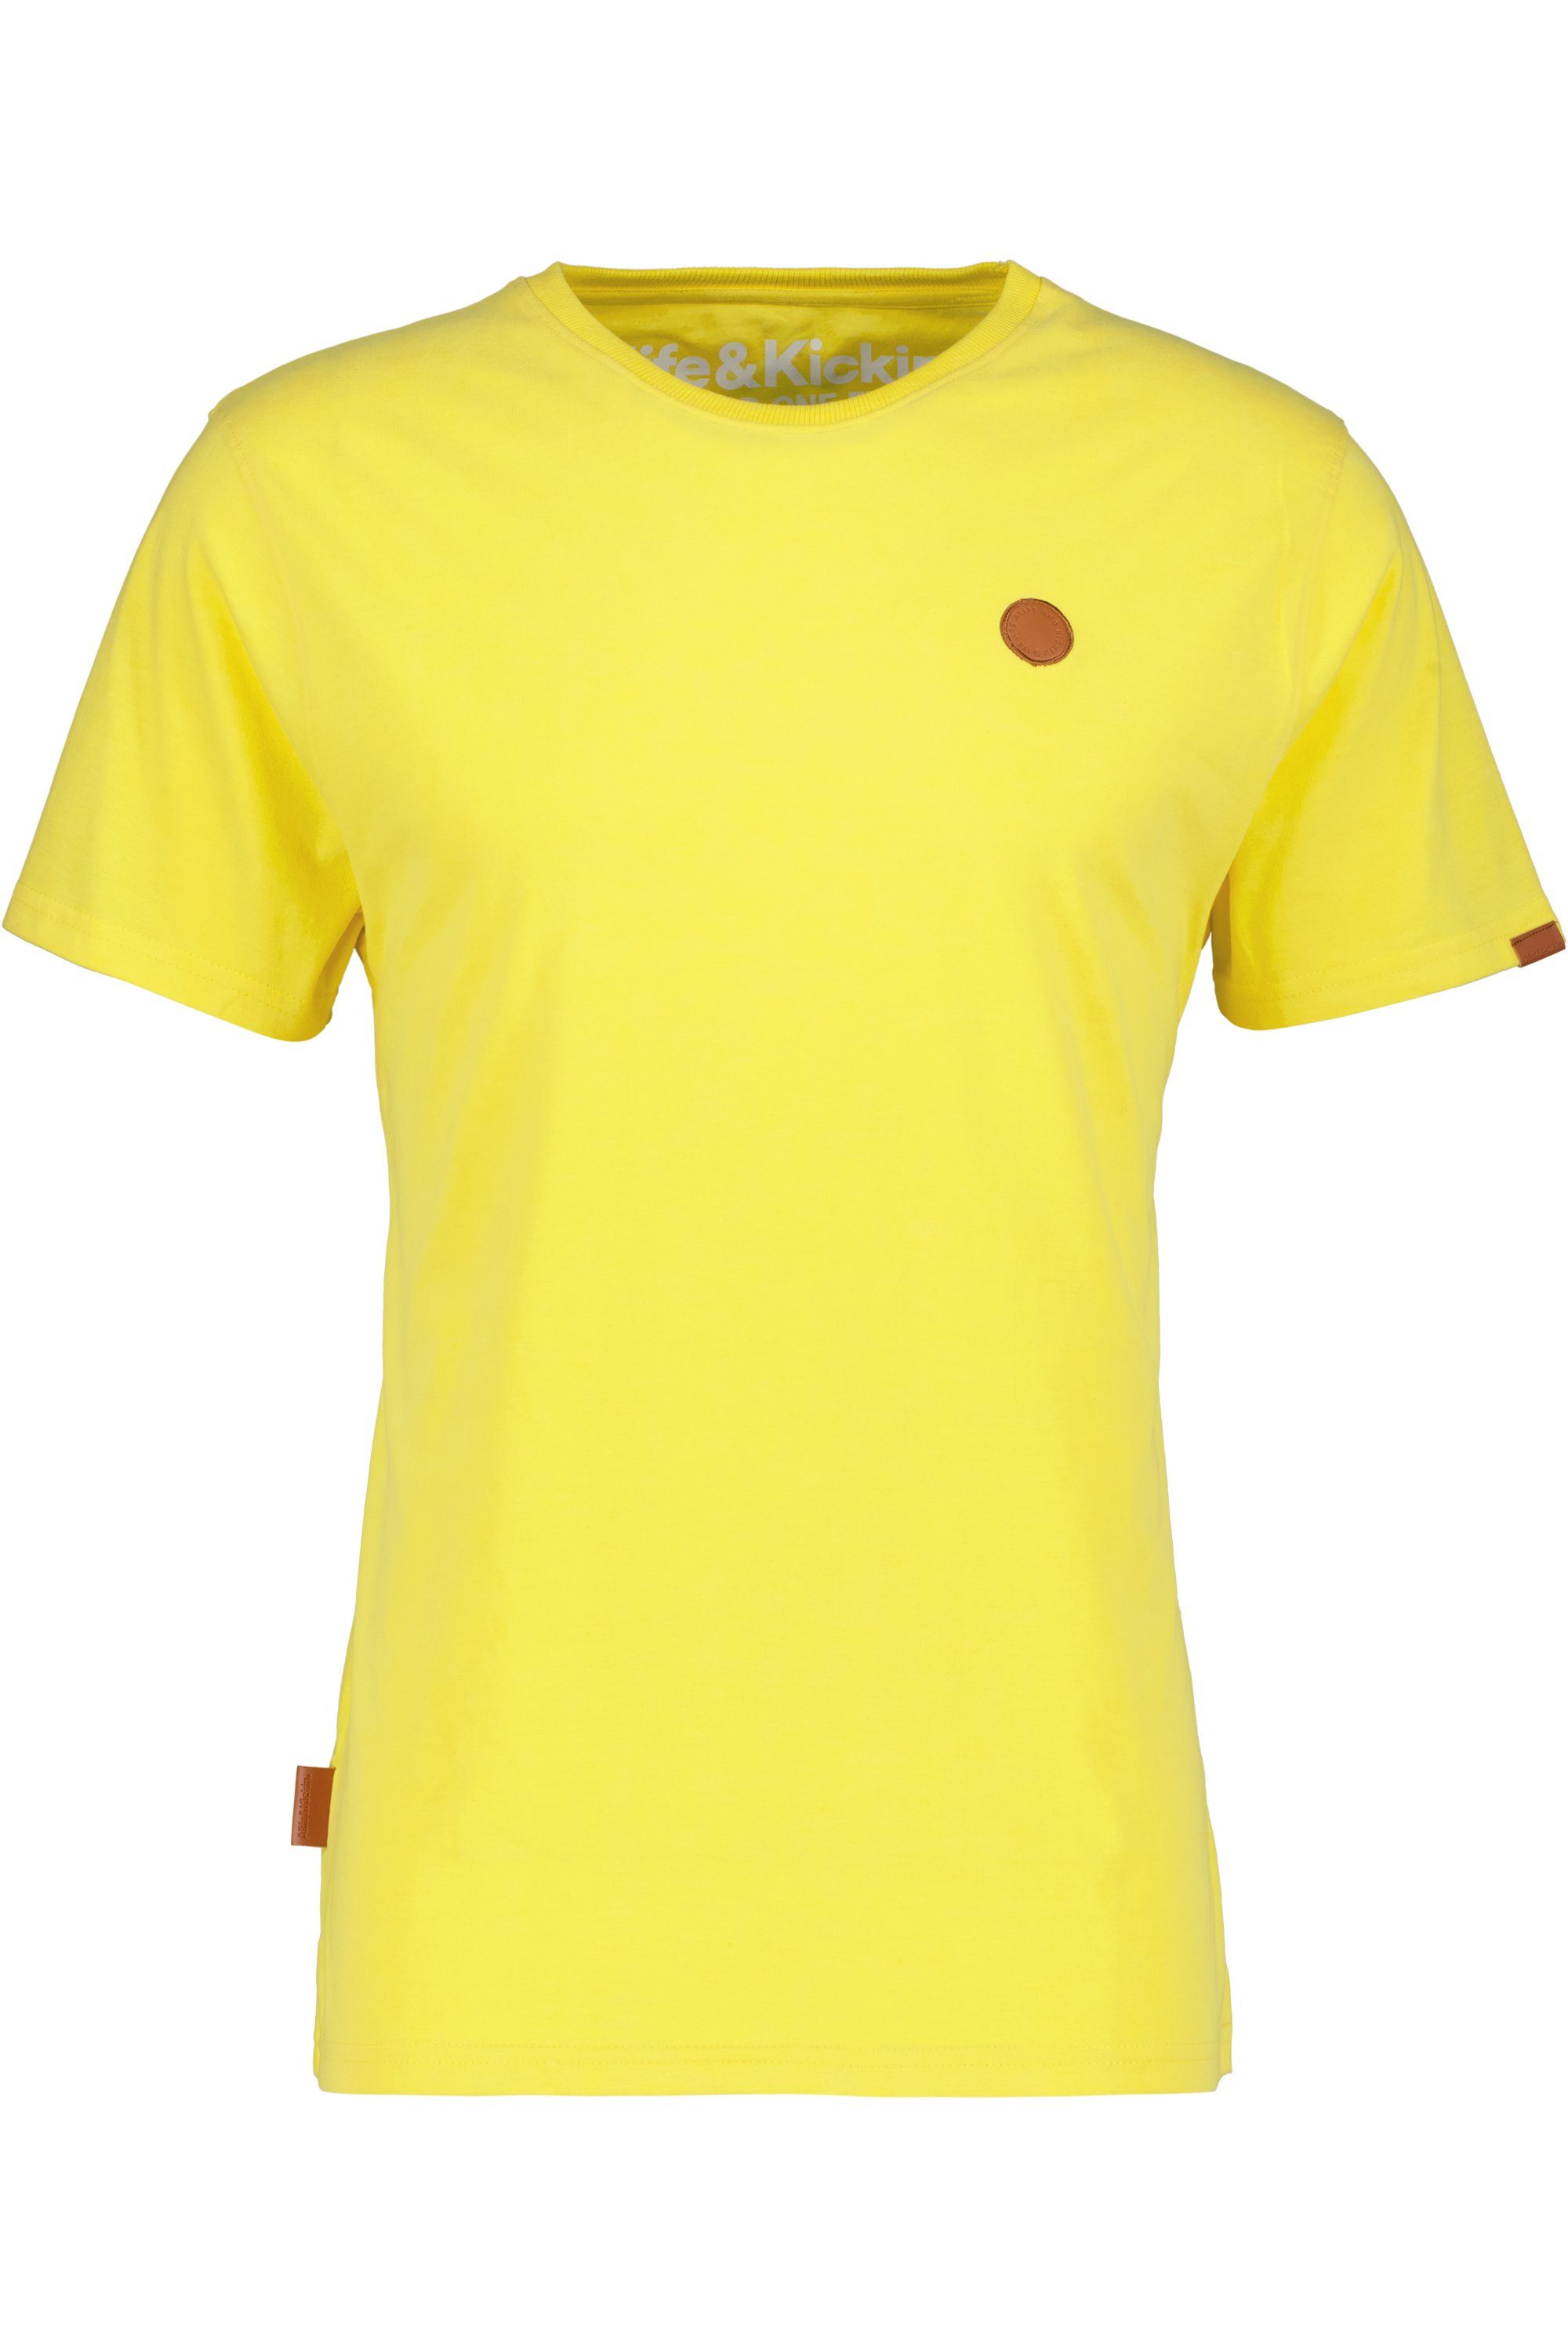 Alife & Kickin T-Shirt Shirt T-Shirt citron Herren MaddoxAK